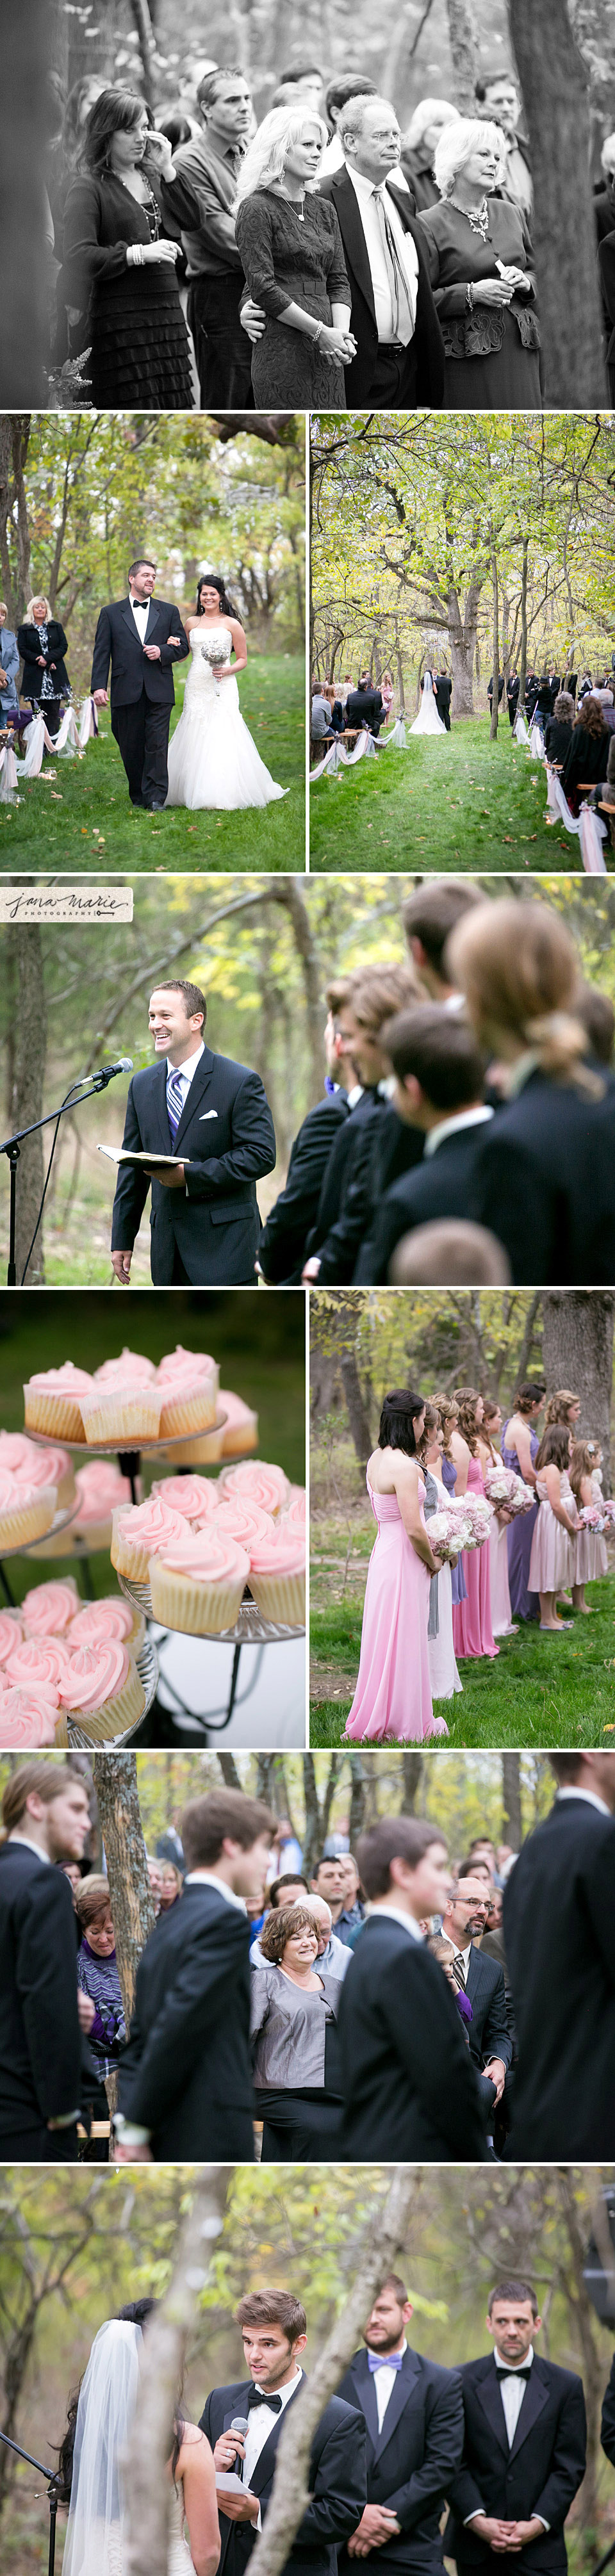 Cupcakes, wedding ceremony, cloudy weddings, Jana Marie Photos, Friends, Getting married